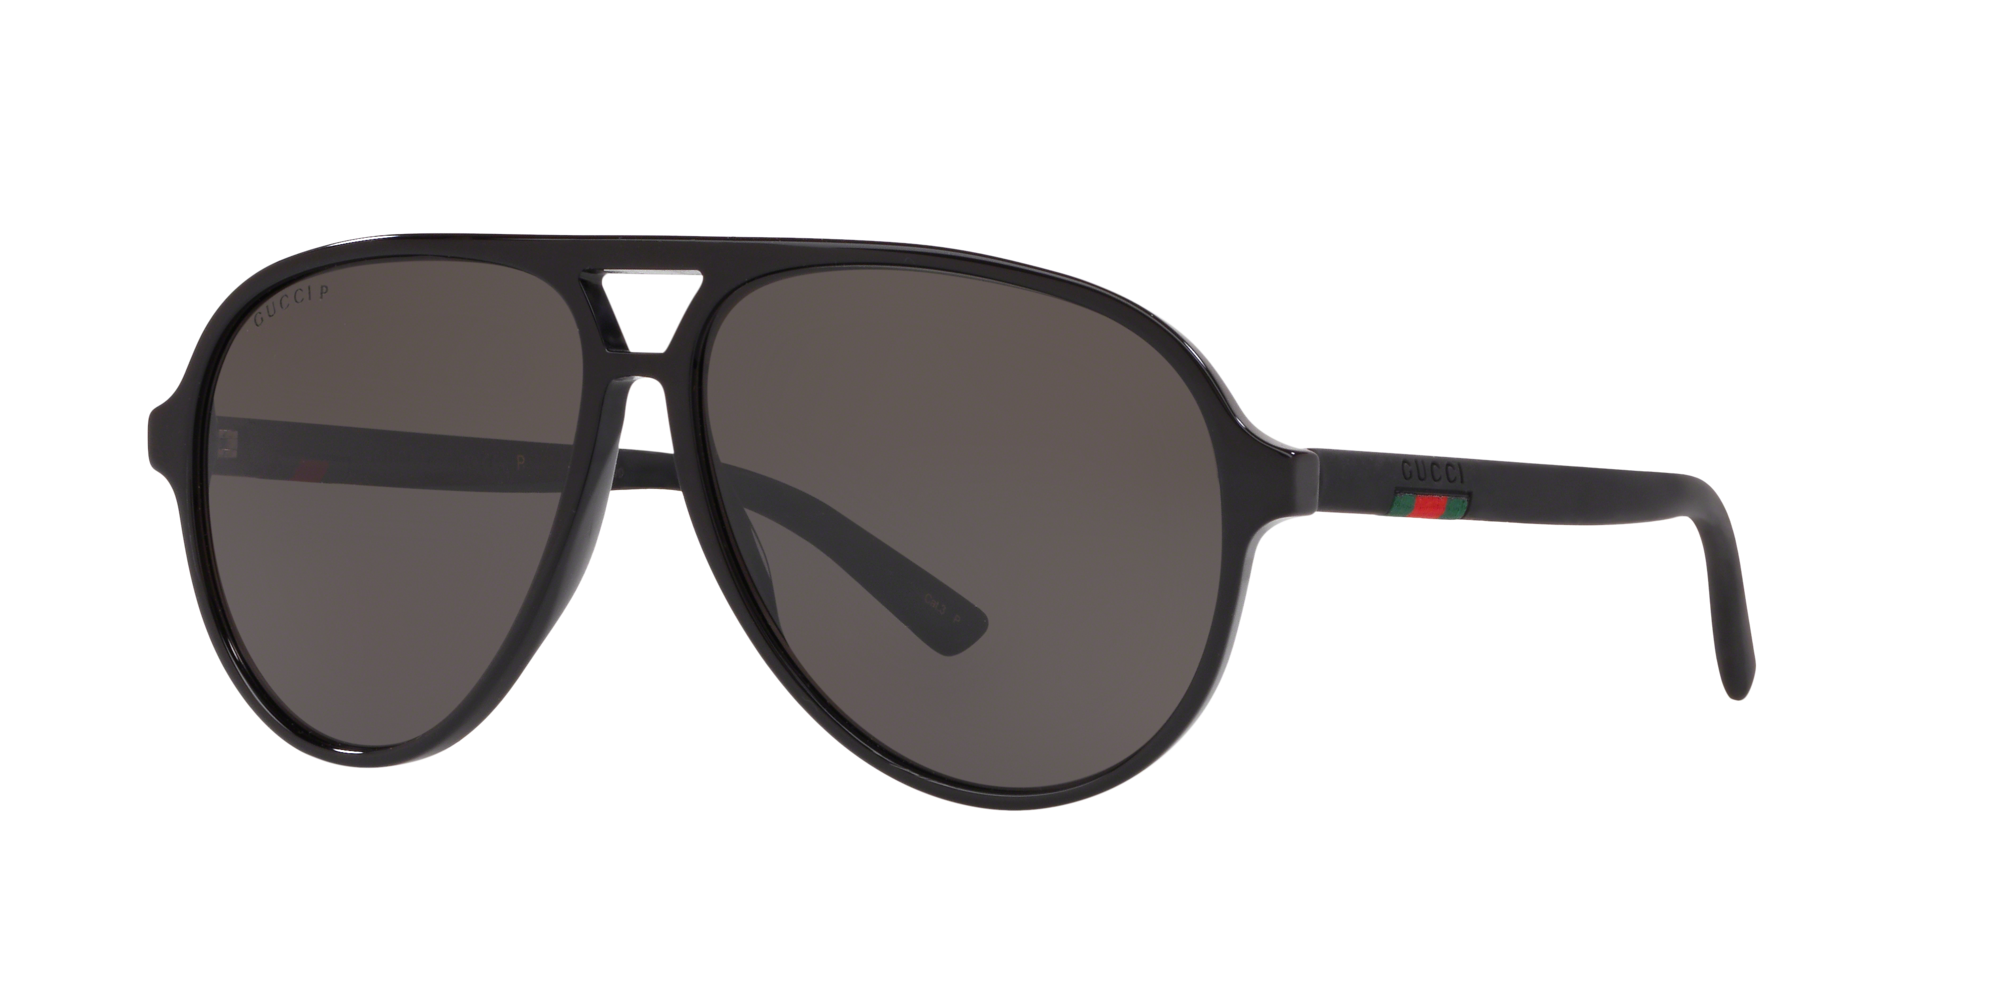 Gucci in Shiny Black Sunglasses | OPSM